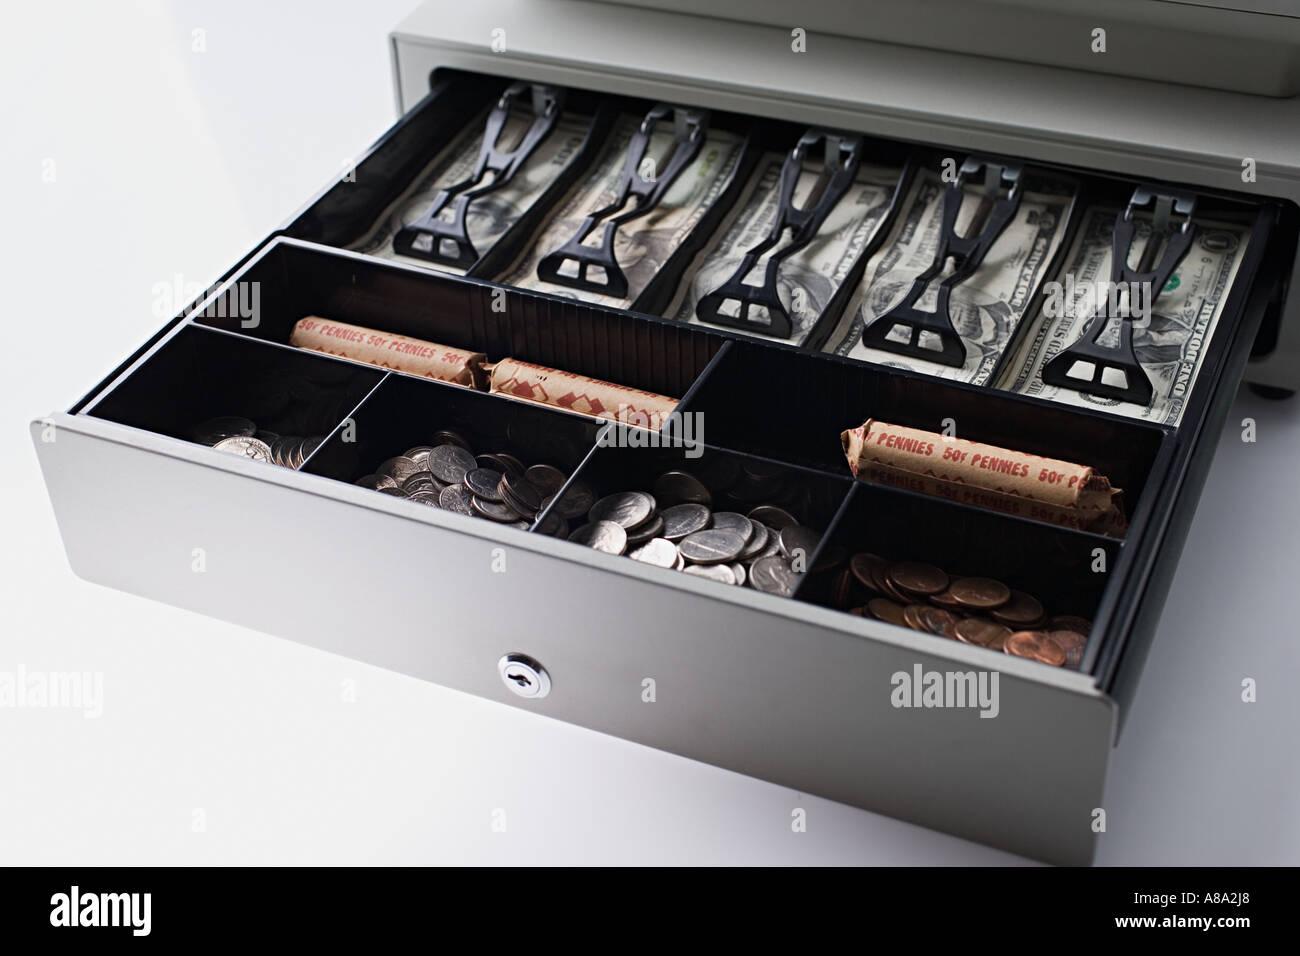 Abrir caja registradora Fotografía de stock - Alamy